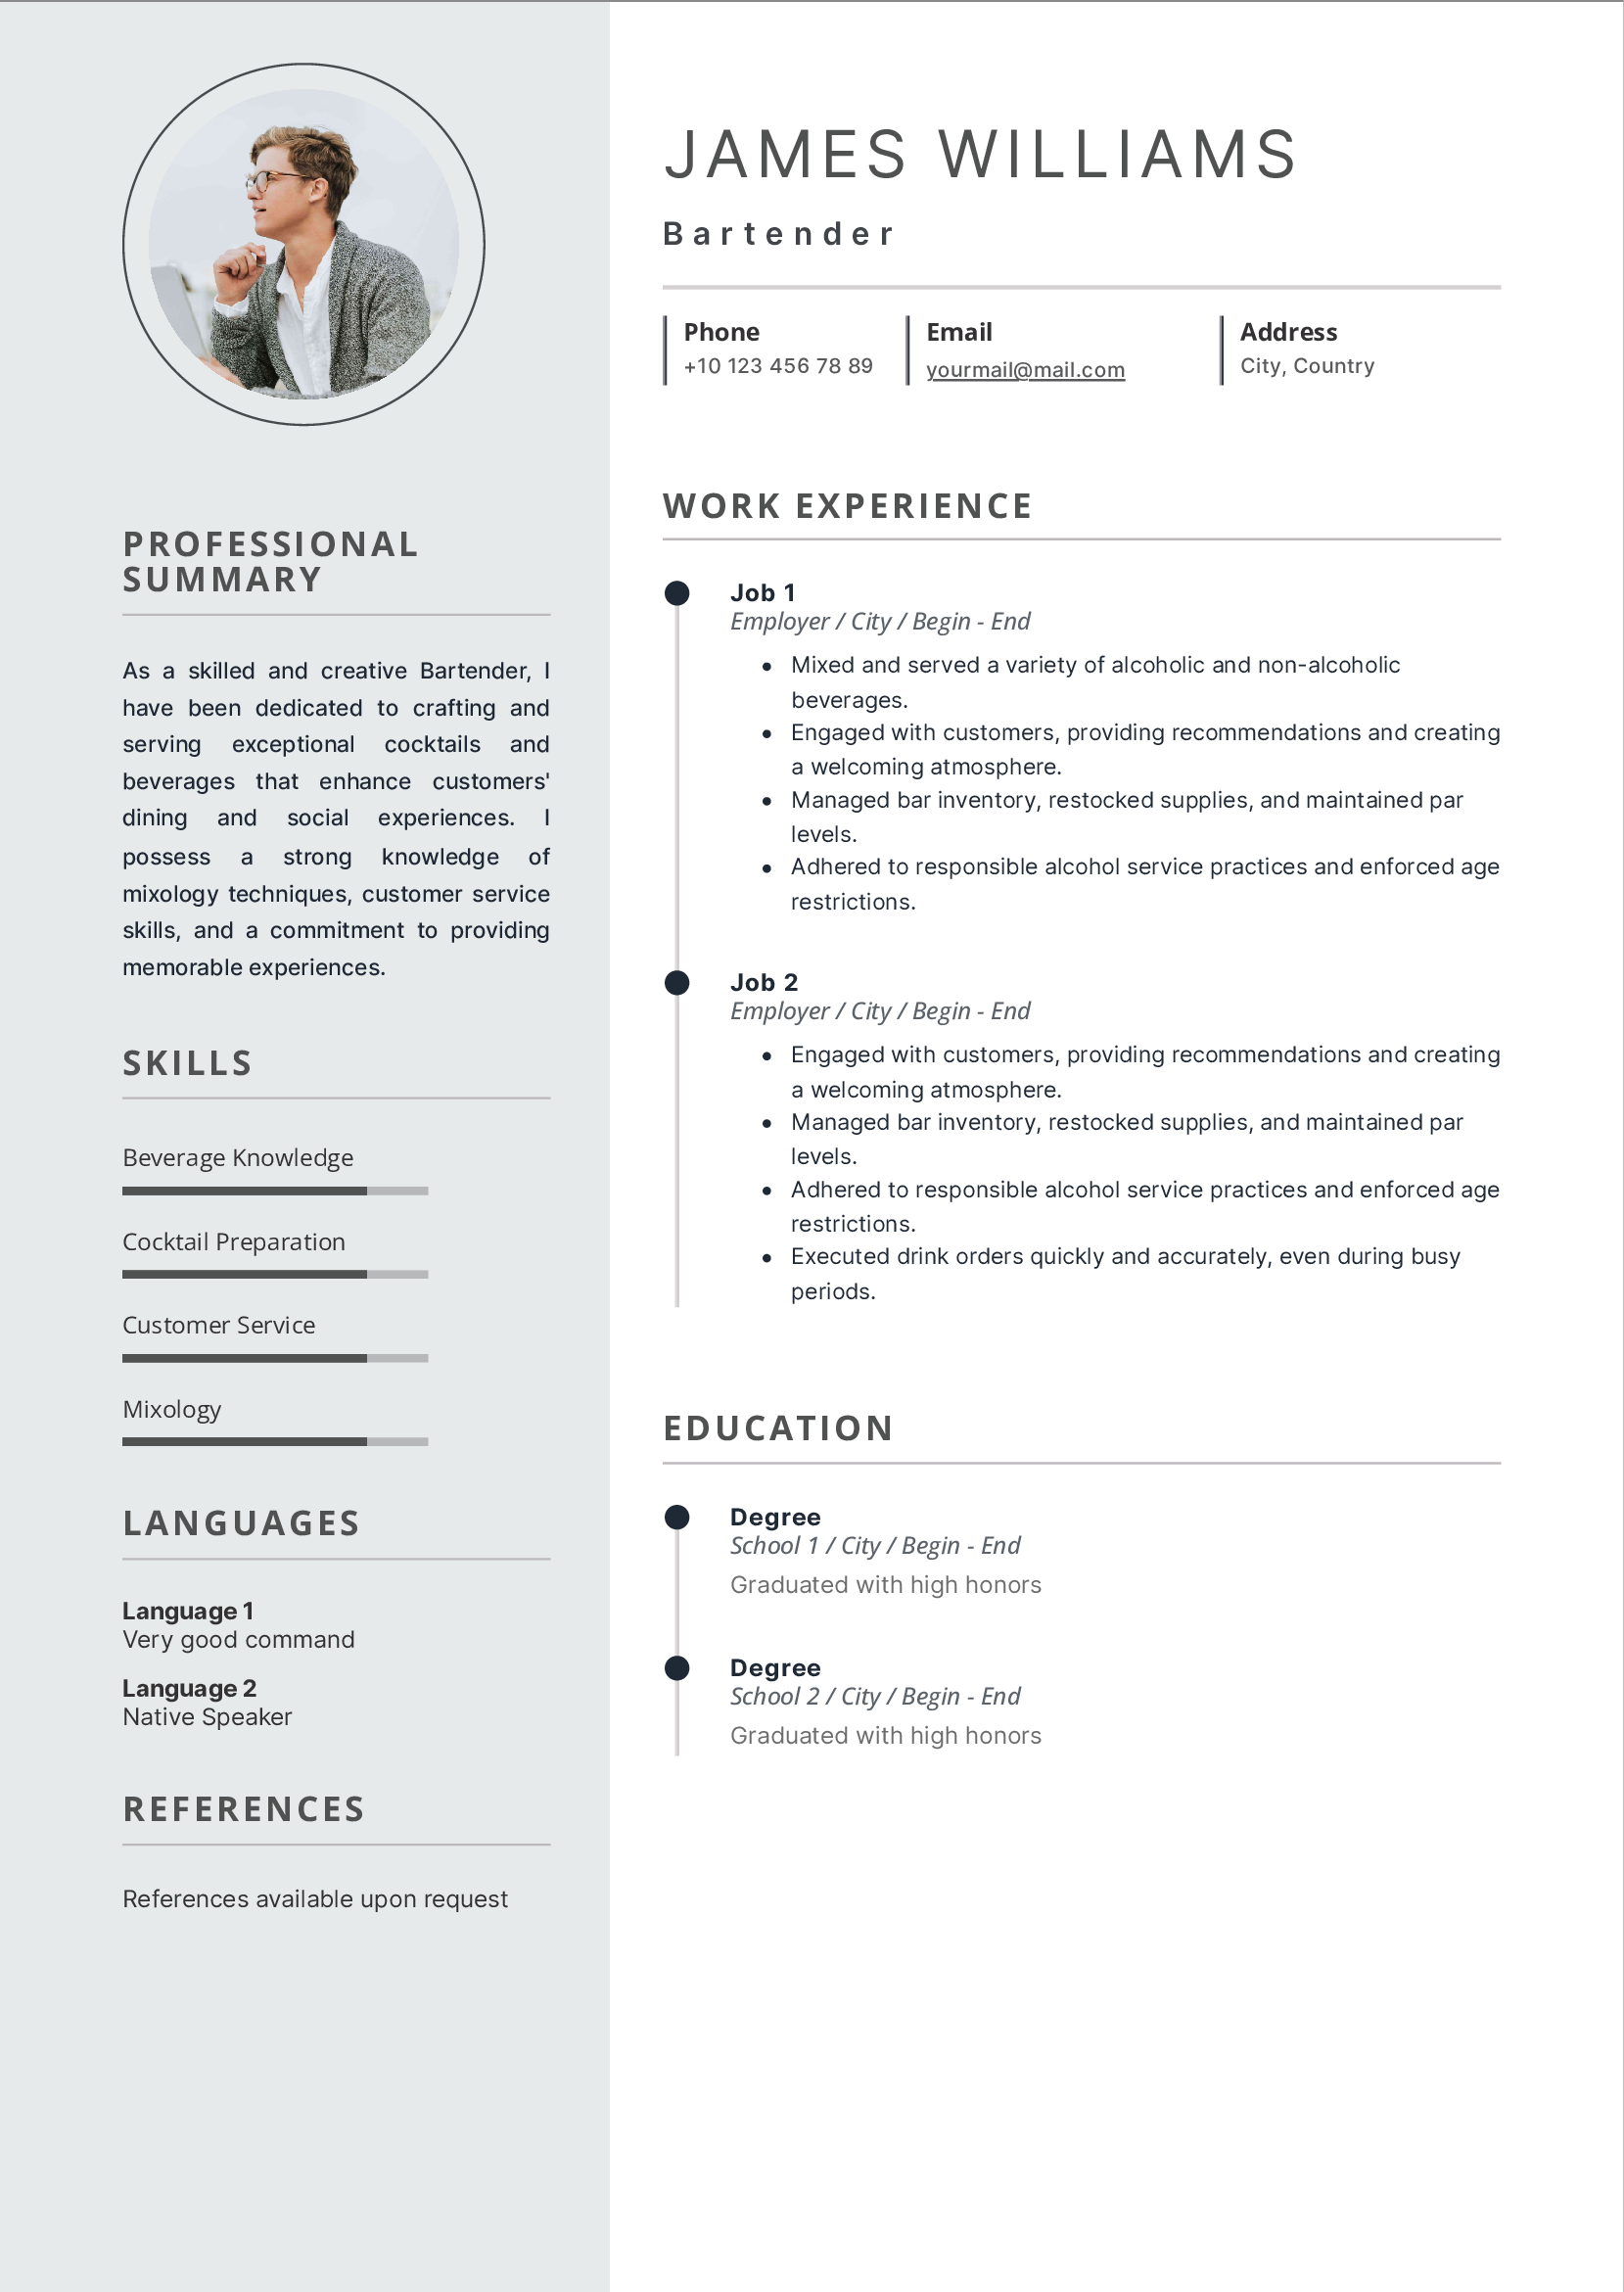 Bartender resume example CV